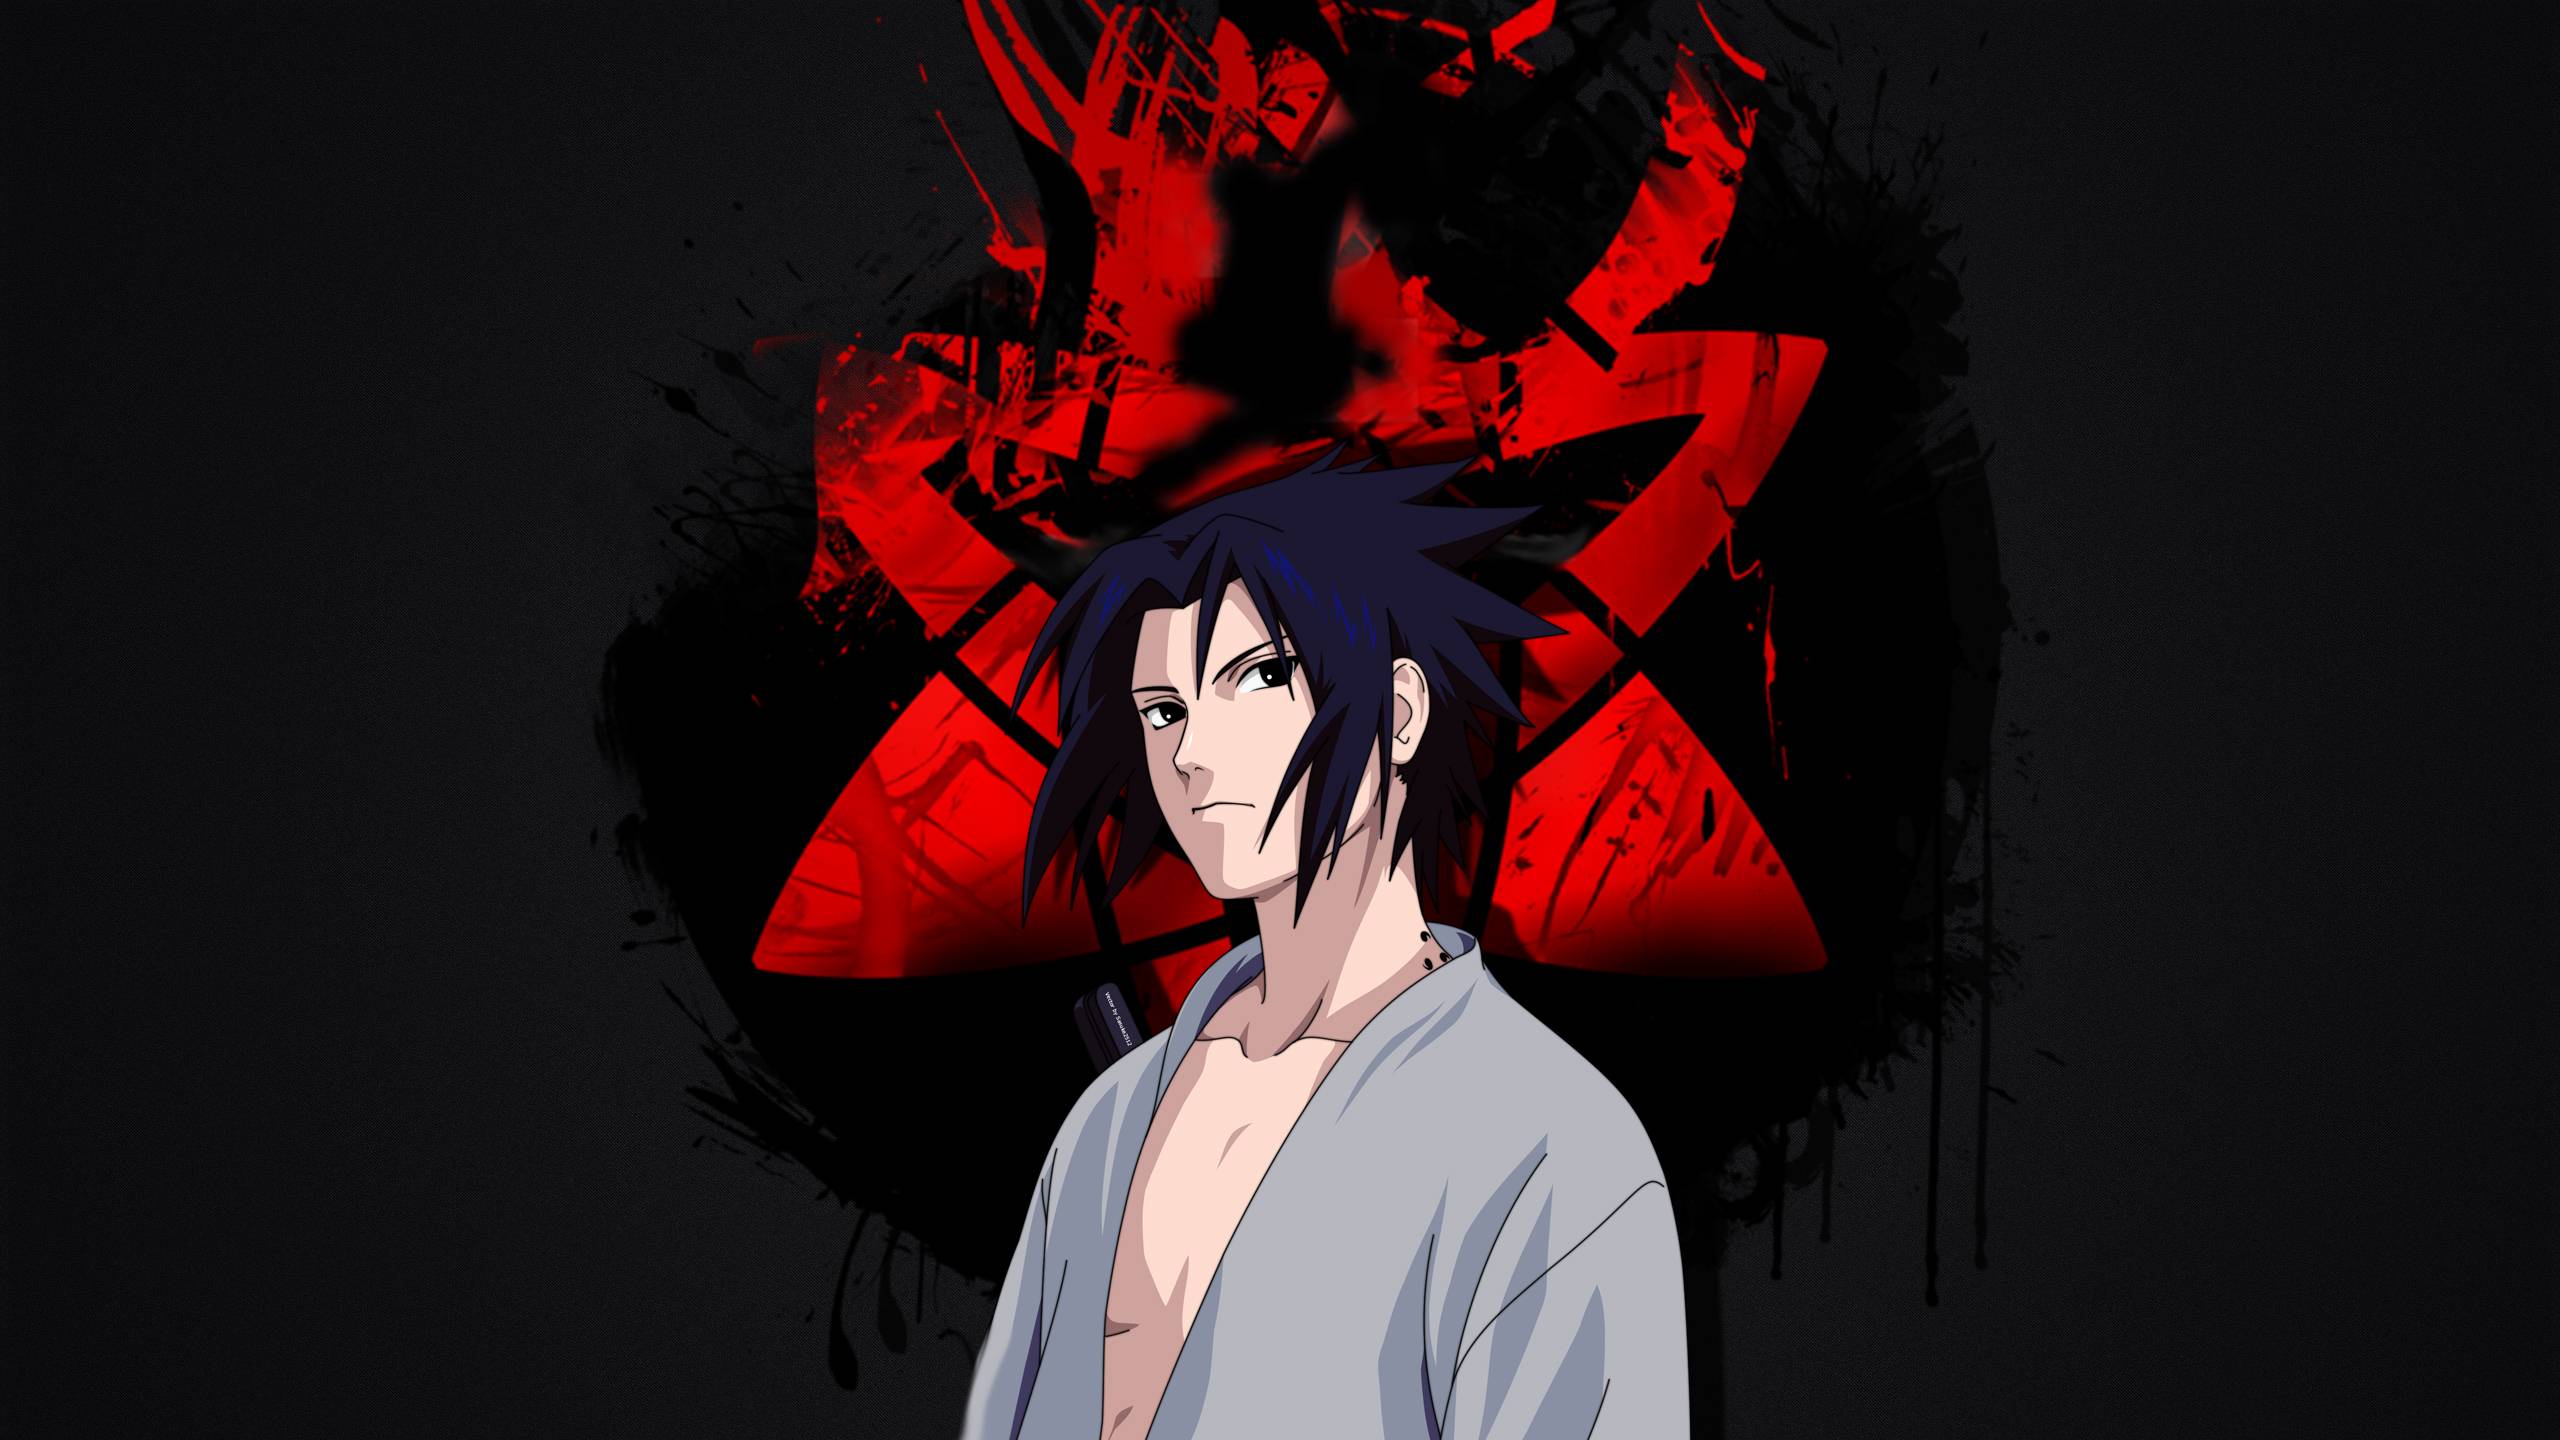 Teen Sasuke Uchiha in shippuden with EMS eyes in the background